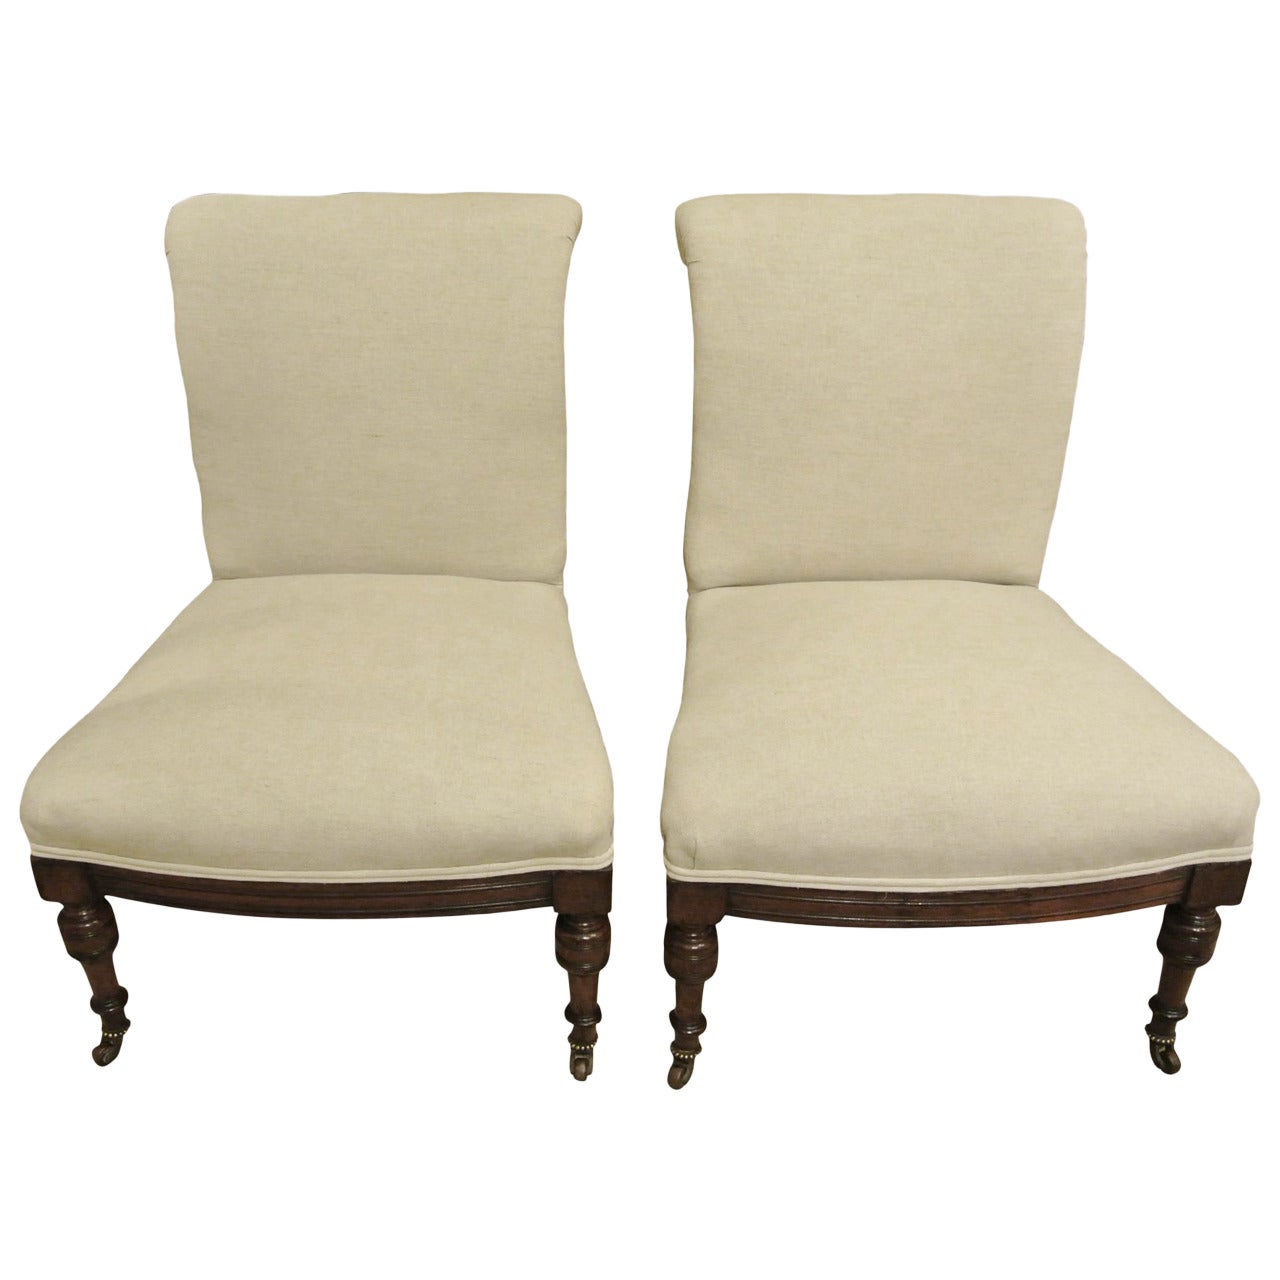 Pair of 19th Century Mahogany Bedroom Chairs